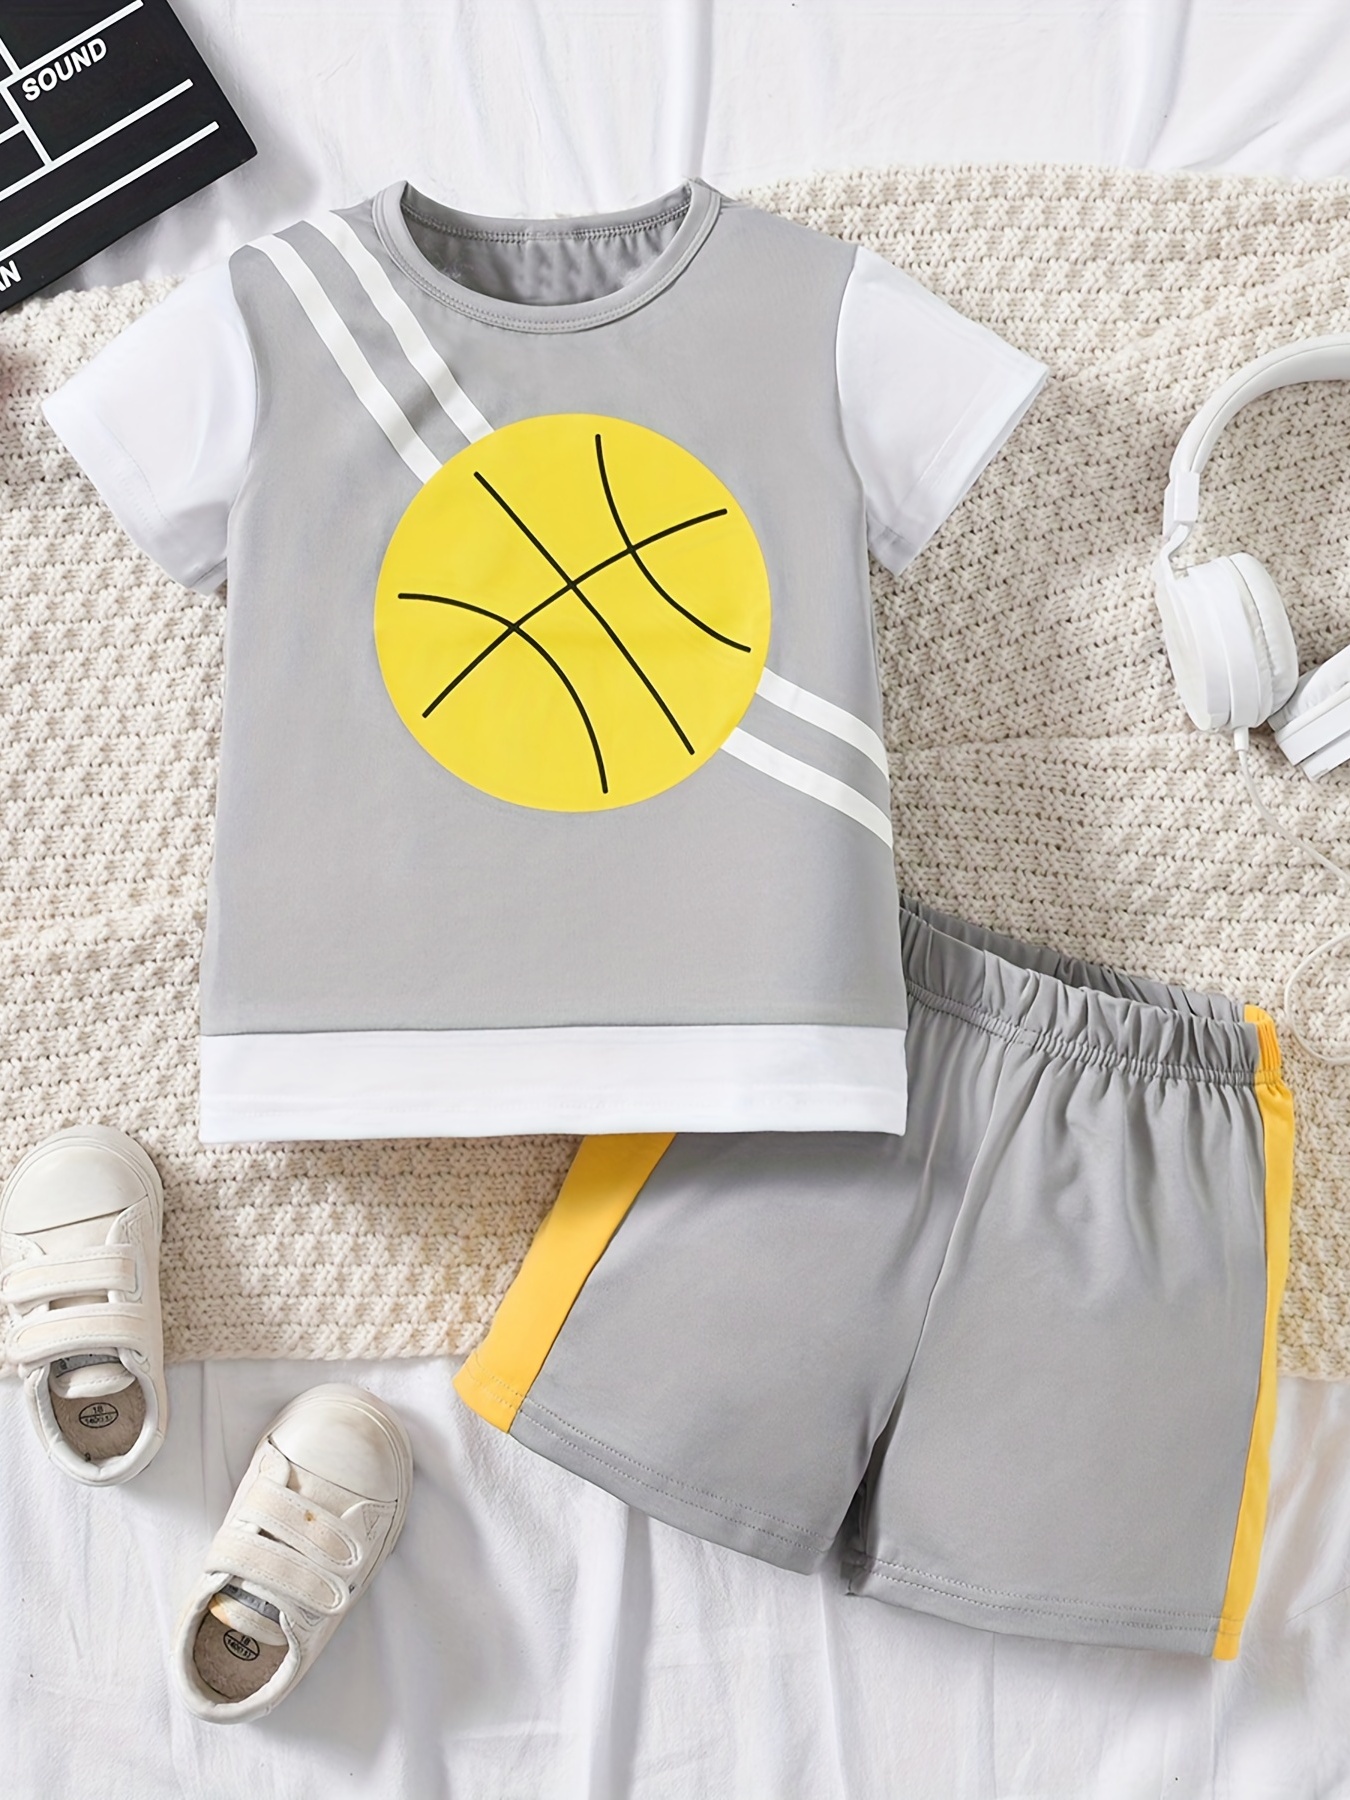 Boys Basketball Clothing.